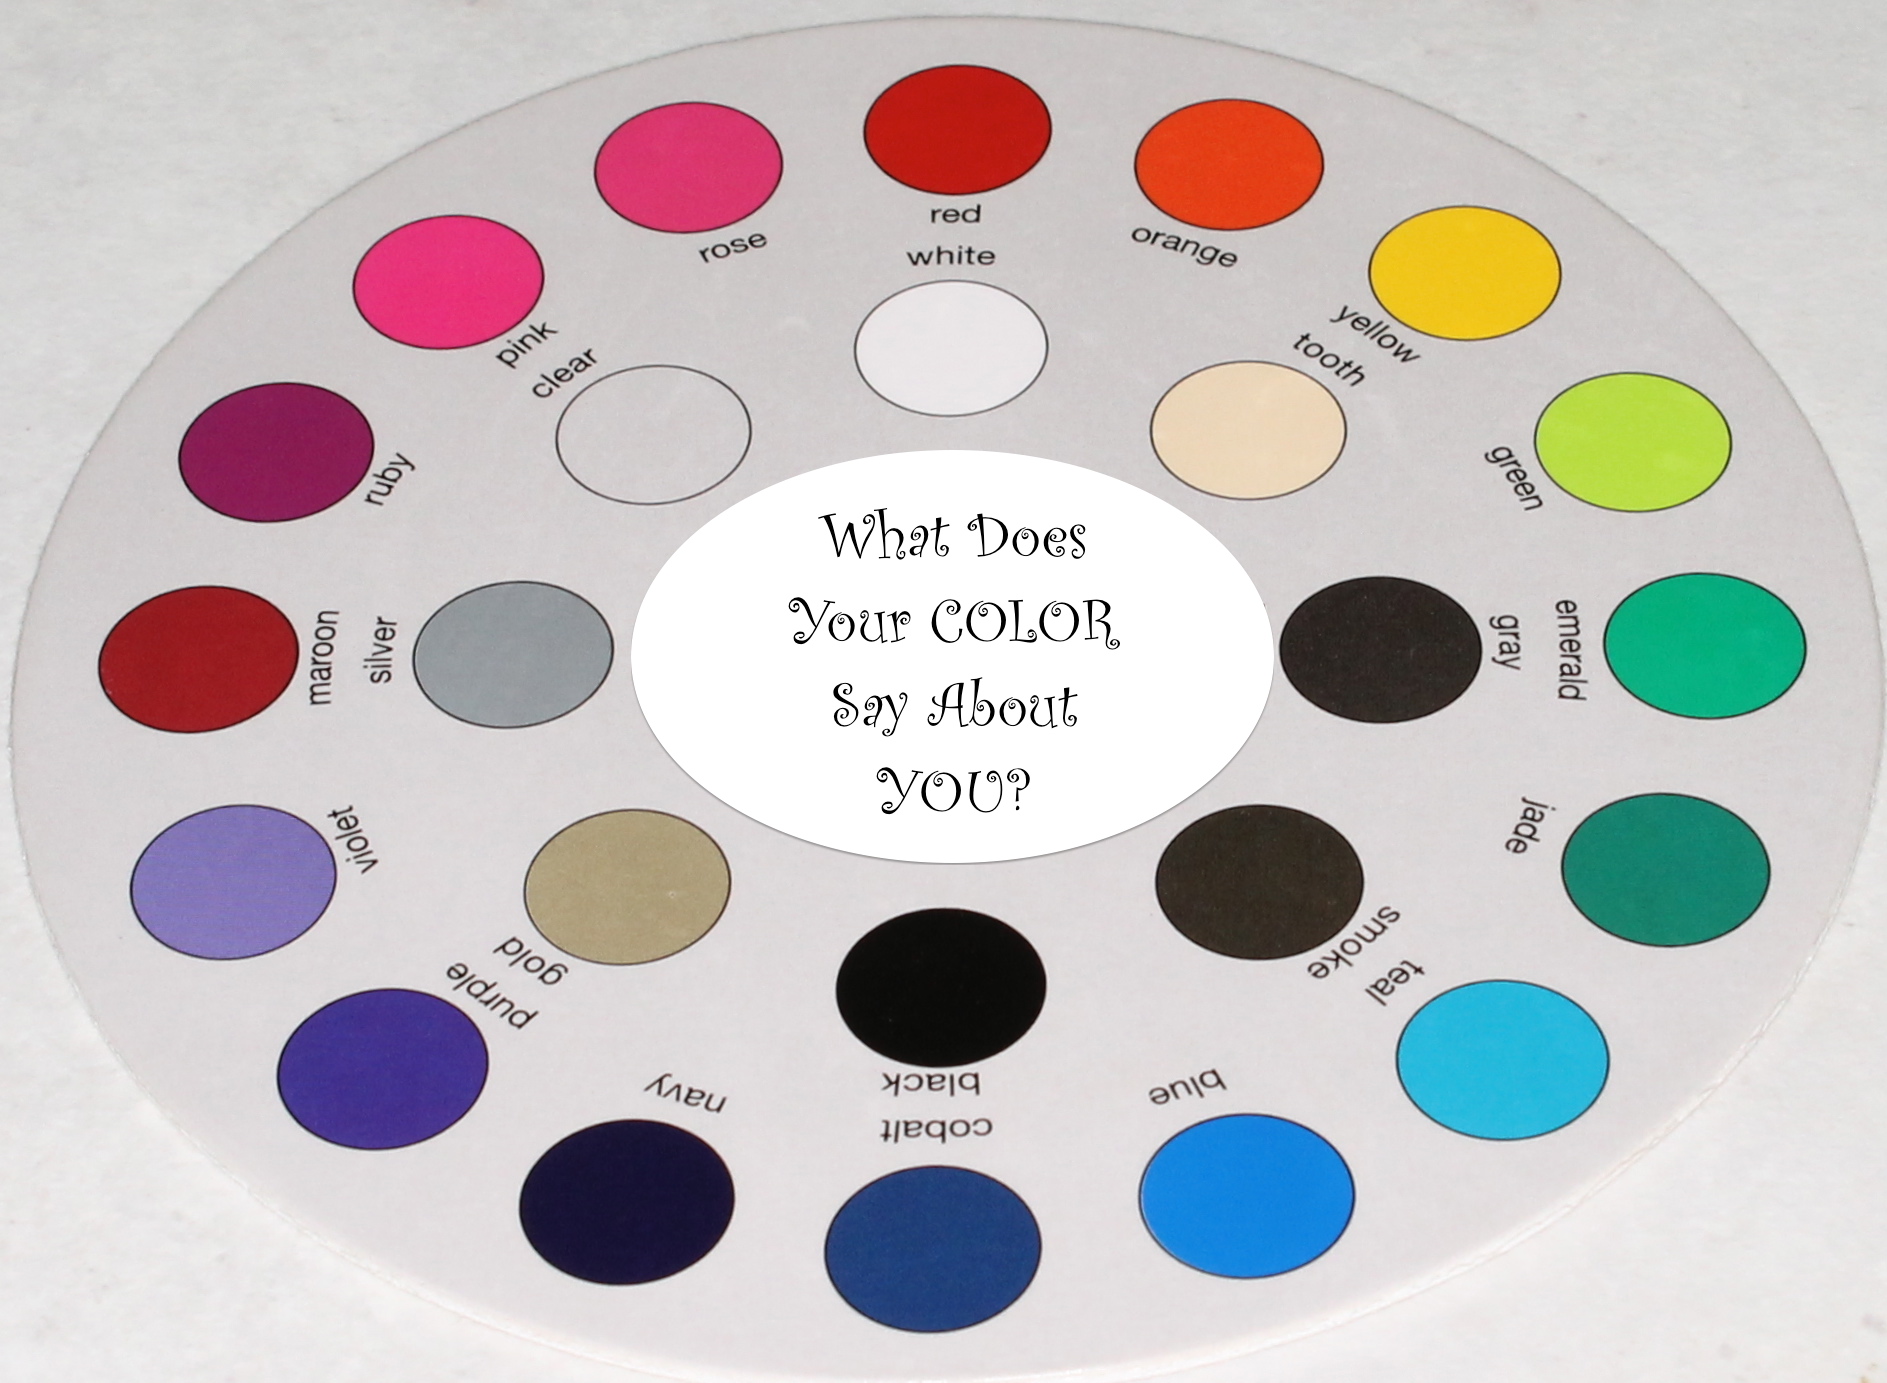 braces colors wheel game